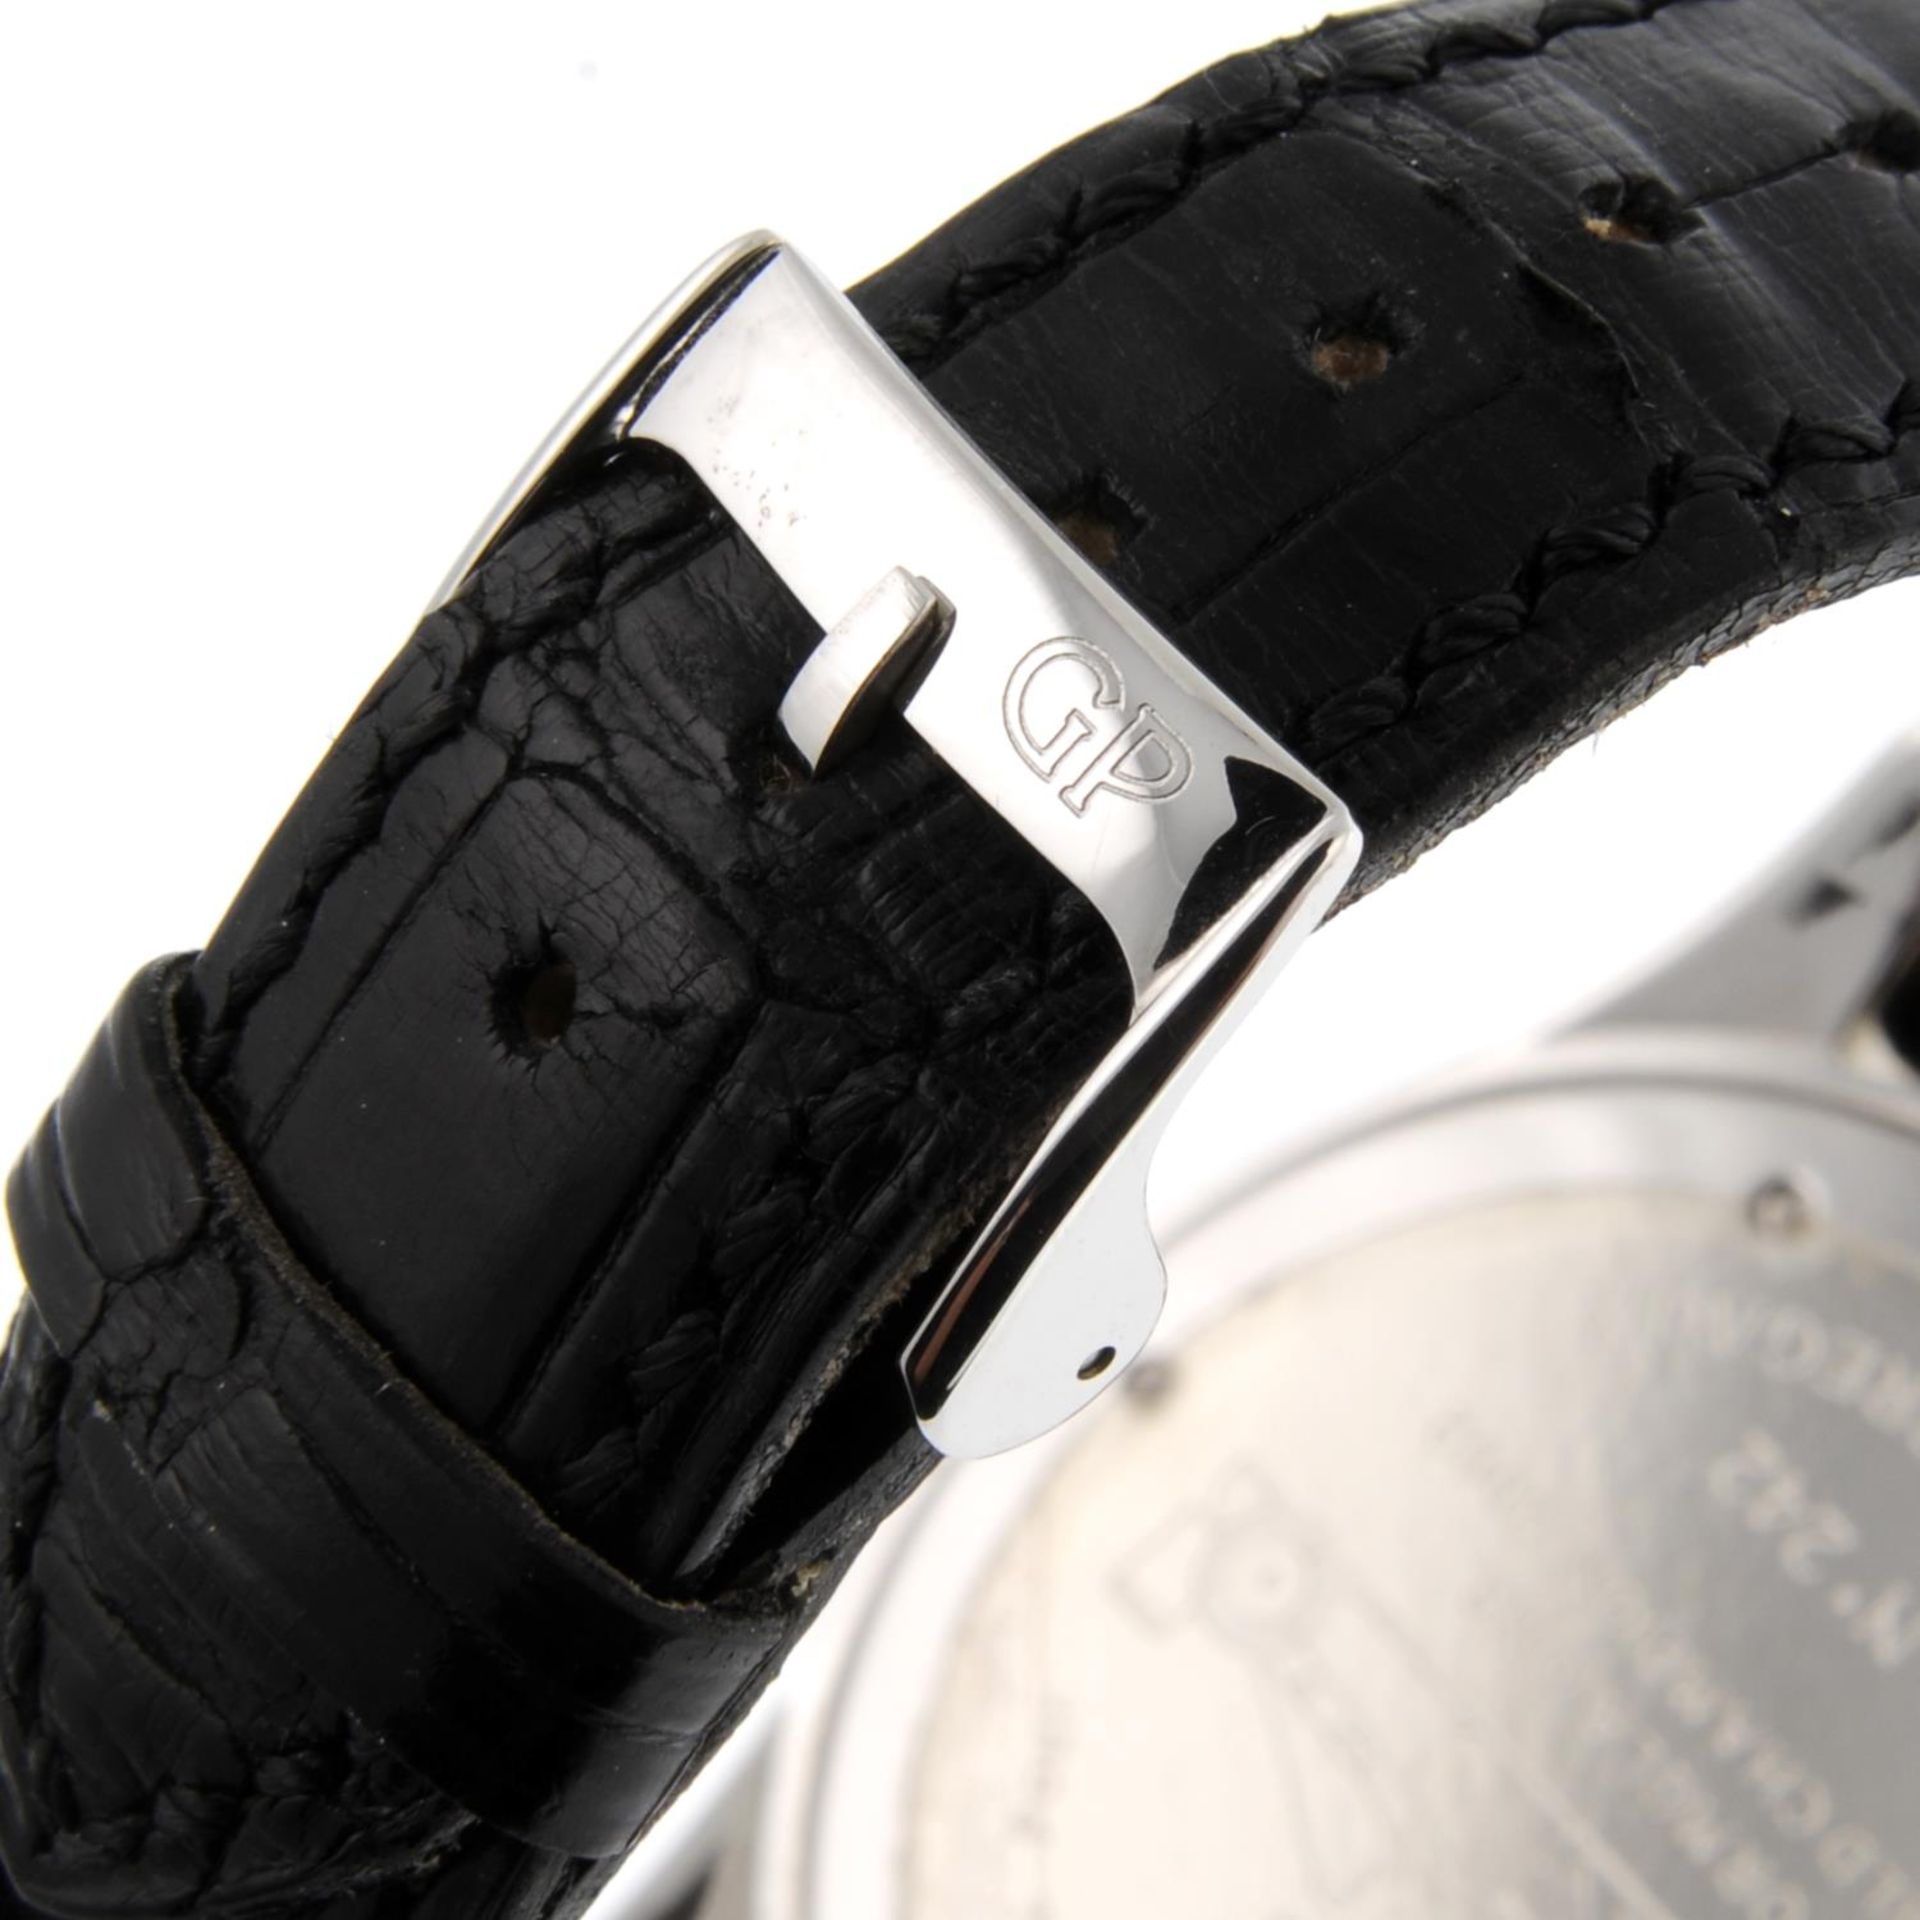 GIRARD-PERREGAUX - a gentleman's F1 Ferrari World Champion 2002 chronograph wrist watch. - Bild 2 aus 5